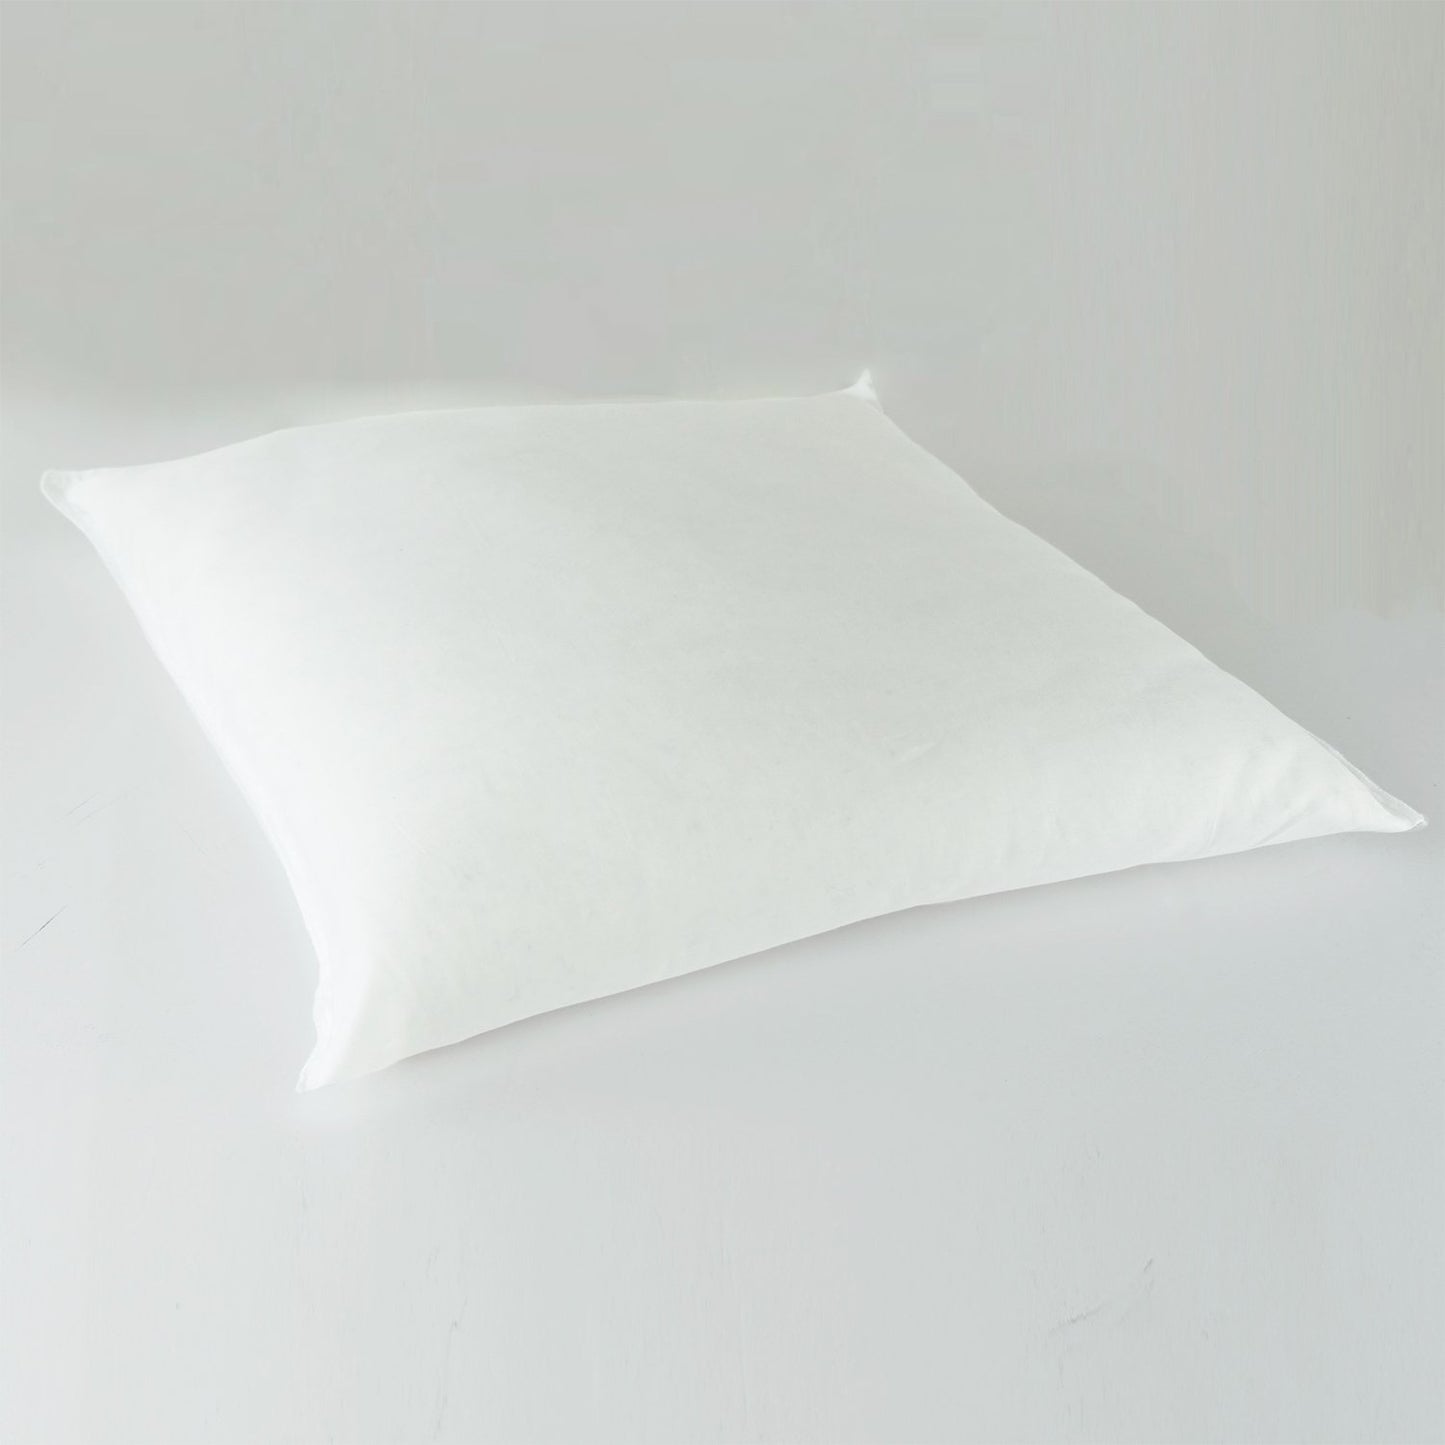 J-Life Tombo Red Zabuton Floor Pillow_Pillows & Shams_Zabuton Floor Pillows_100% Cotton_Reversible_Handmade